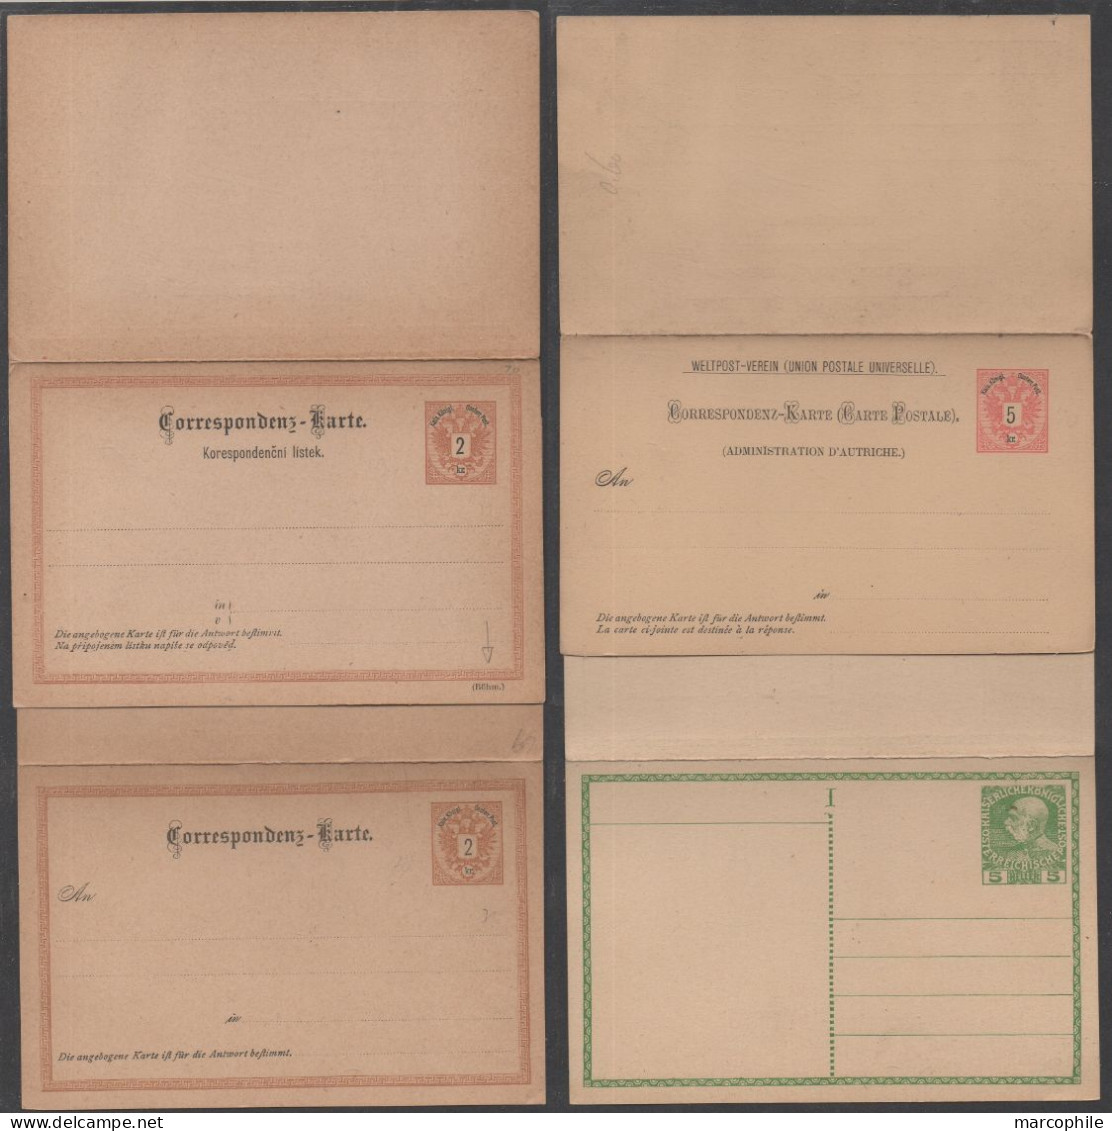 AUTRICHE - ÖSTERREICH / 10 ENTIERS POSTAUX DOUBLES - REPONSE PAYEE / 2 IMAGES (ref 8143) - Briefkaarten